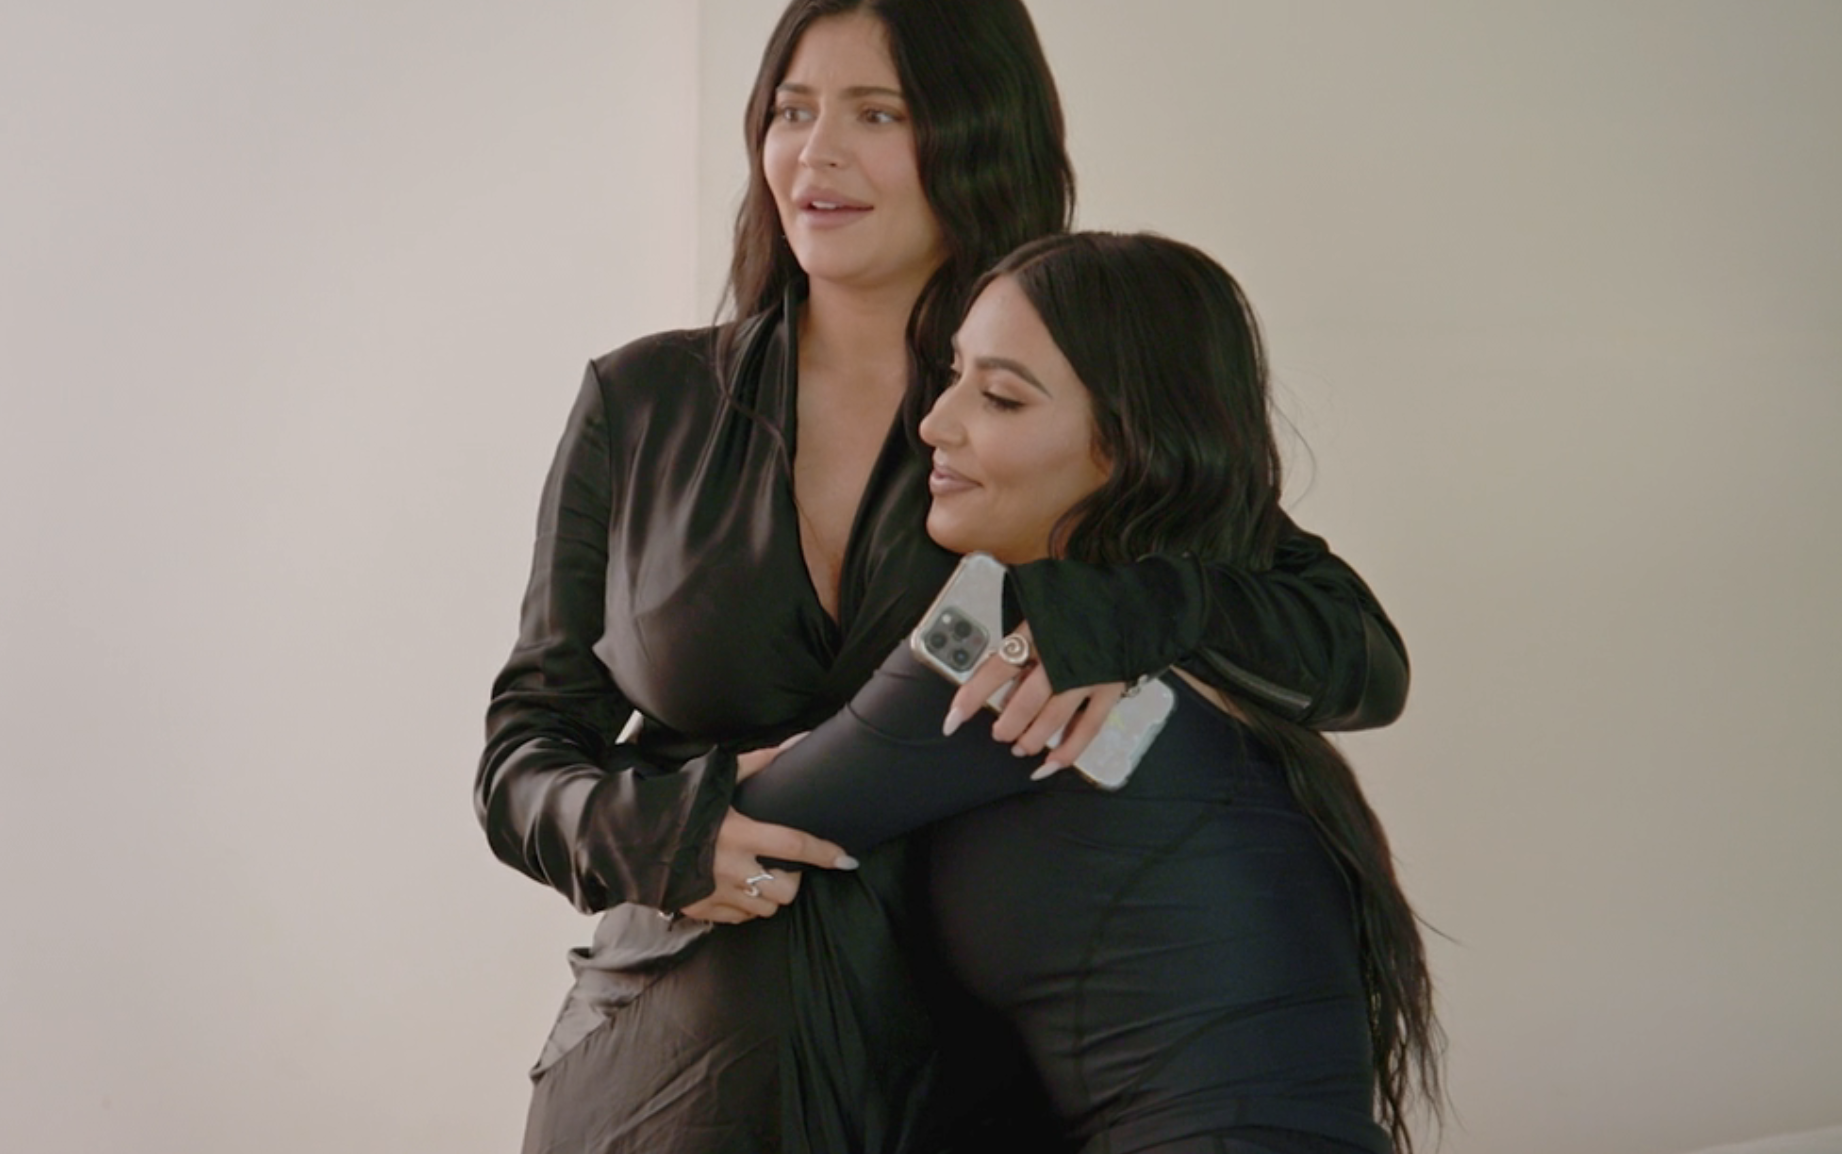 Kylie and Kim embracing